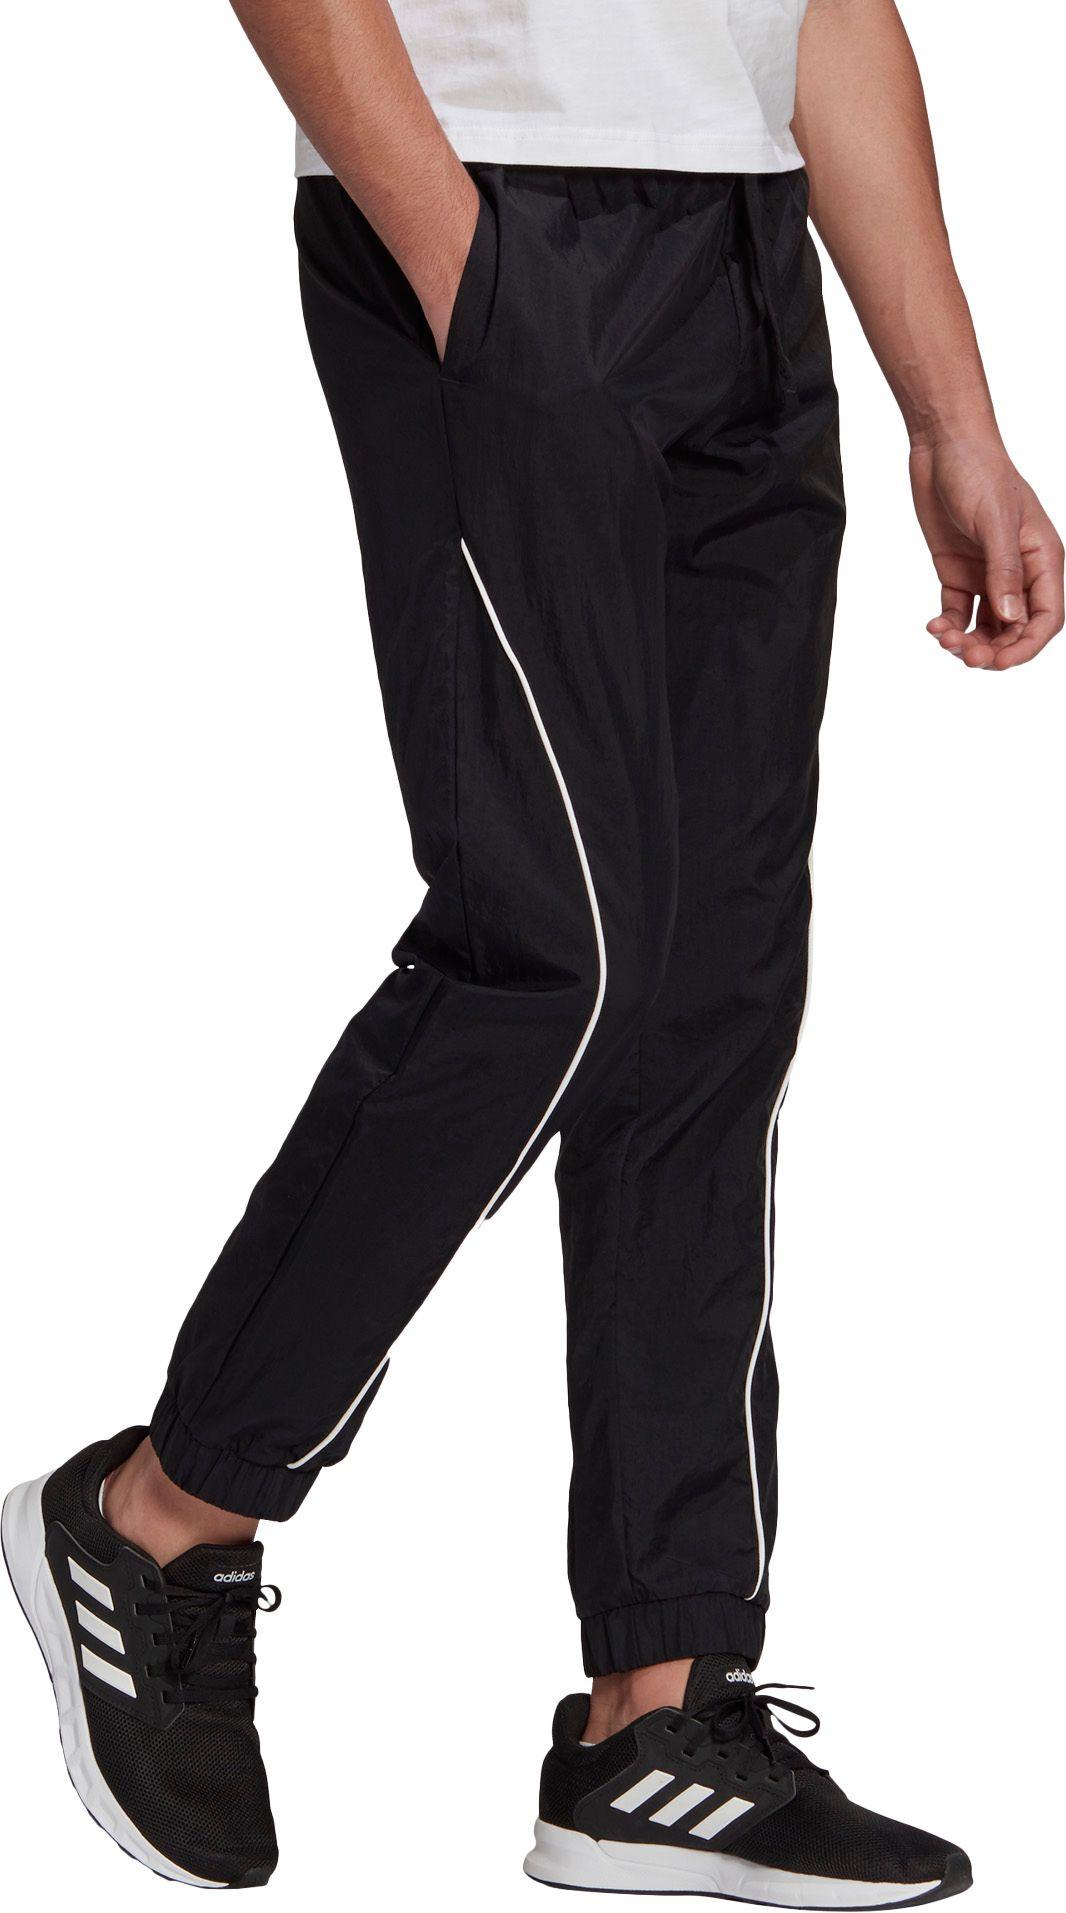 adidas Essentials Logo Track Pants in Black/White (Black) for Men - Lyst